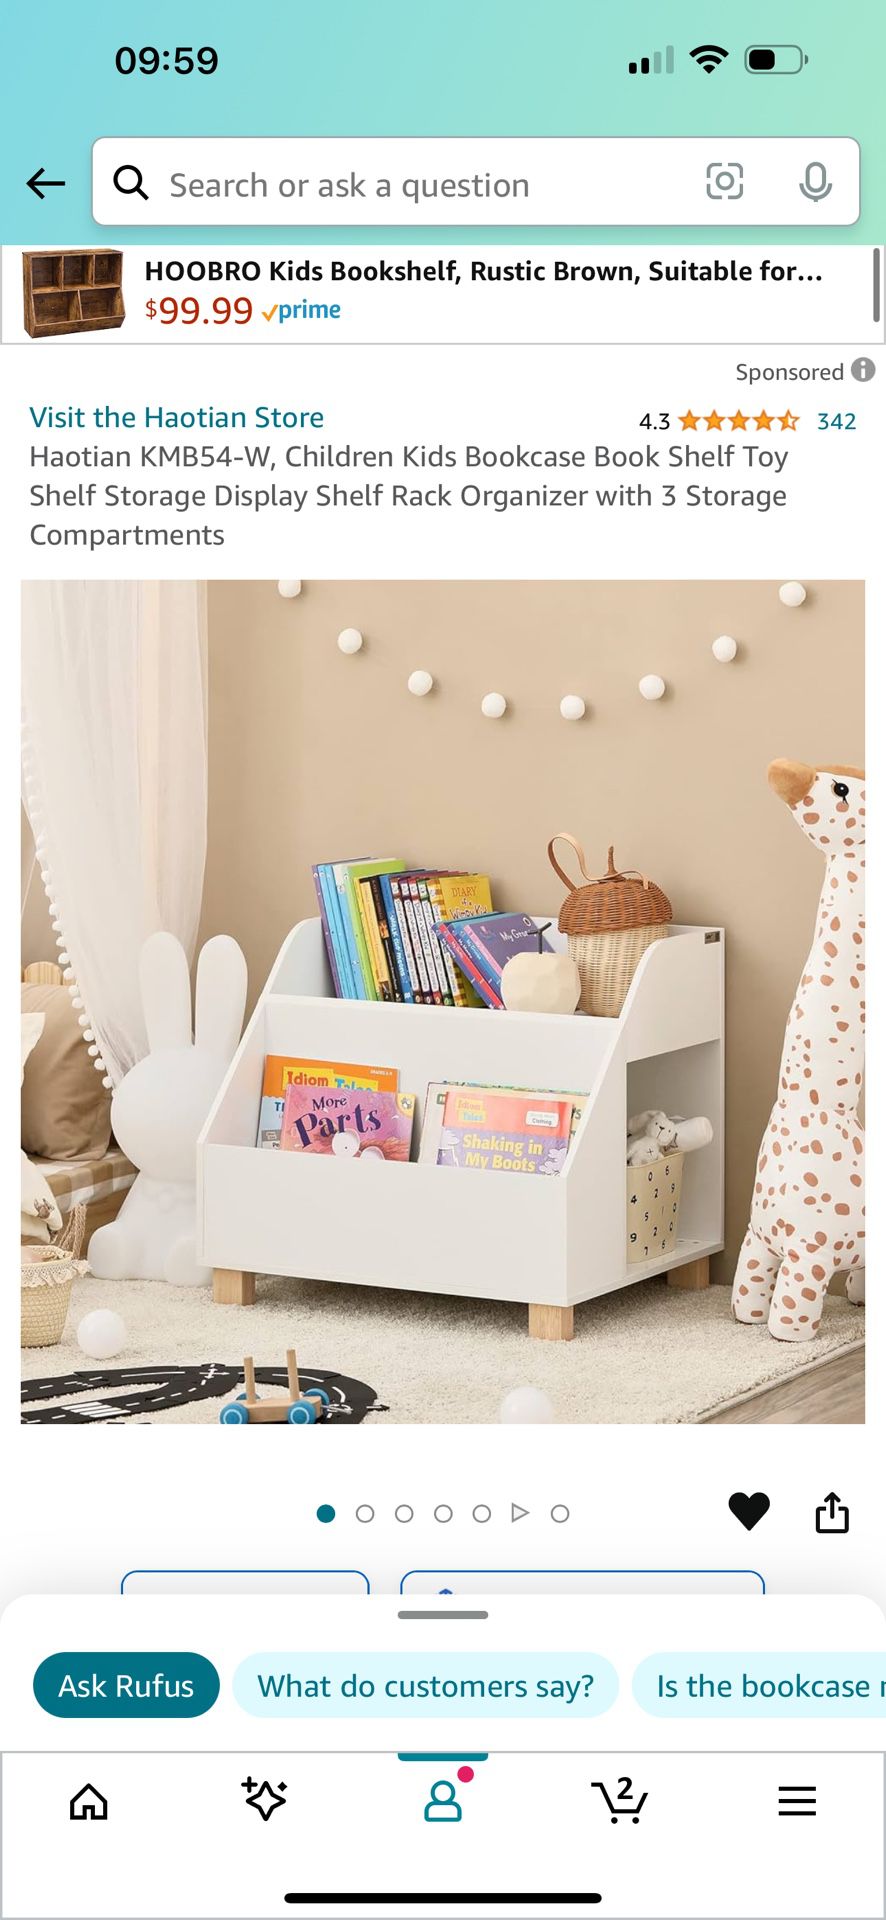 Children Kids Bookcase Book Shelf Toy Shelf Storage Display Shelf Rack Organizer with 3 Storage Compartments 